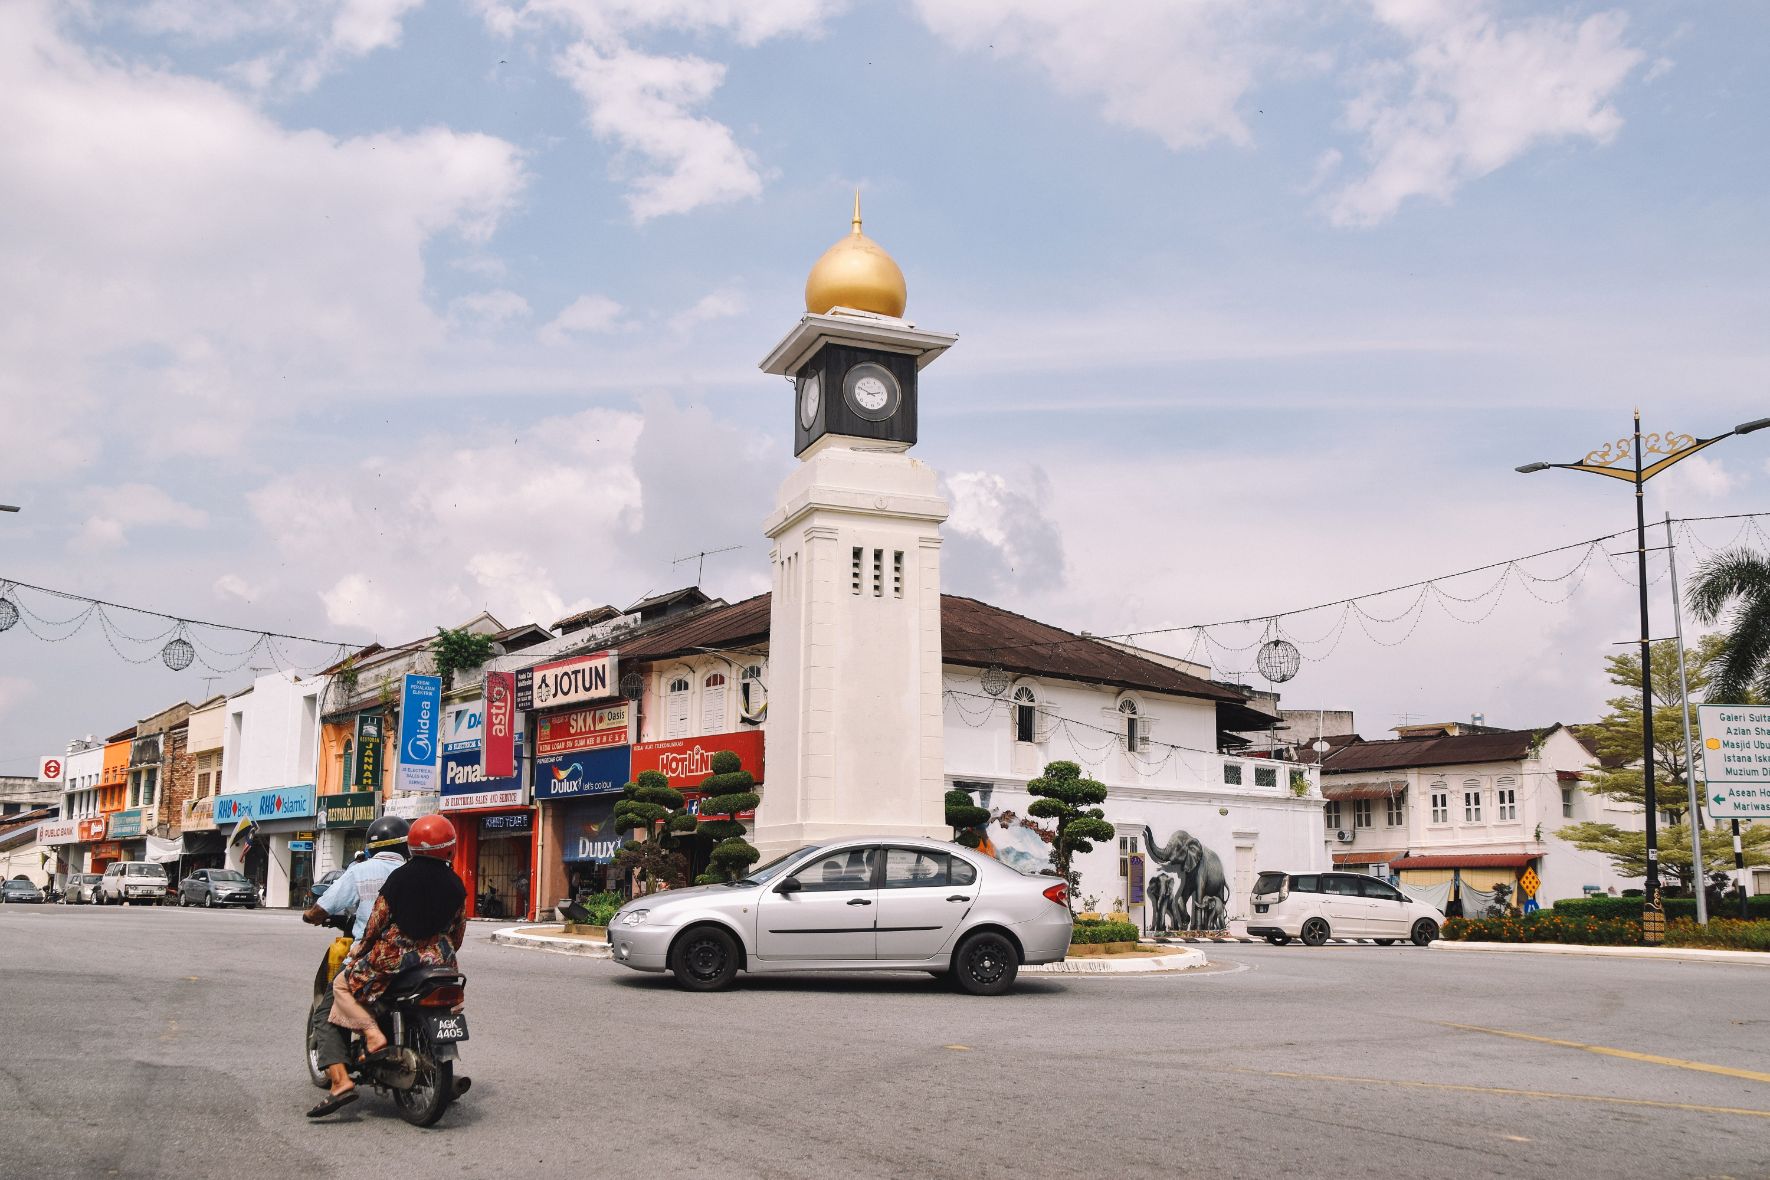 The Taiping Clock Tower